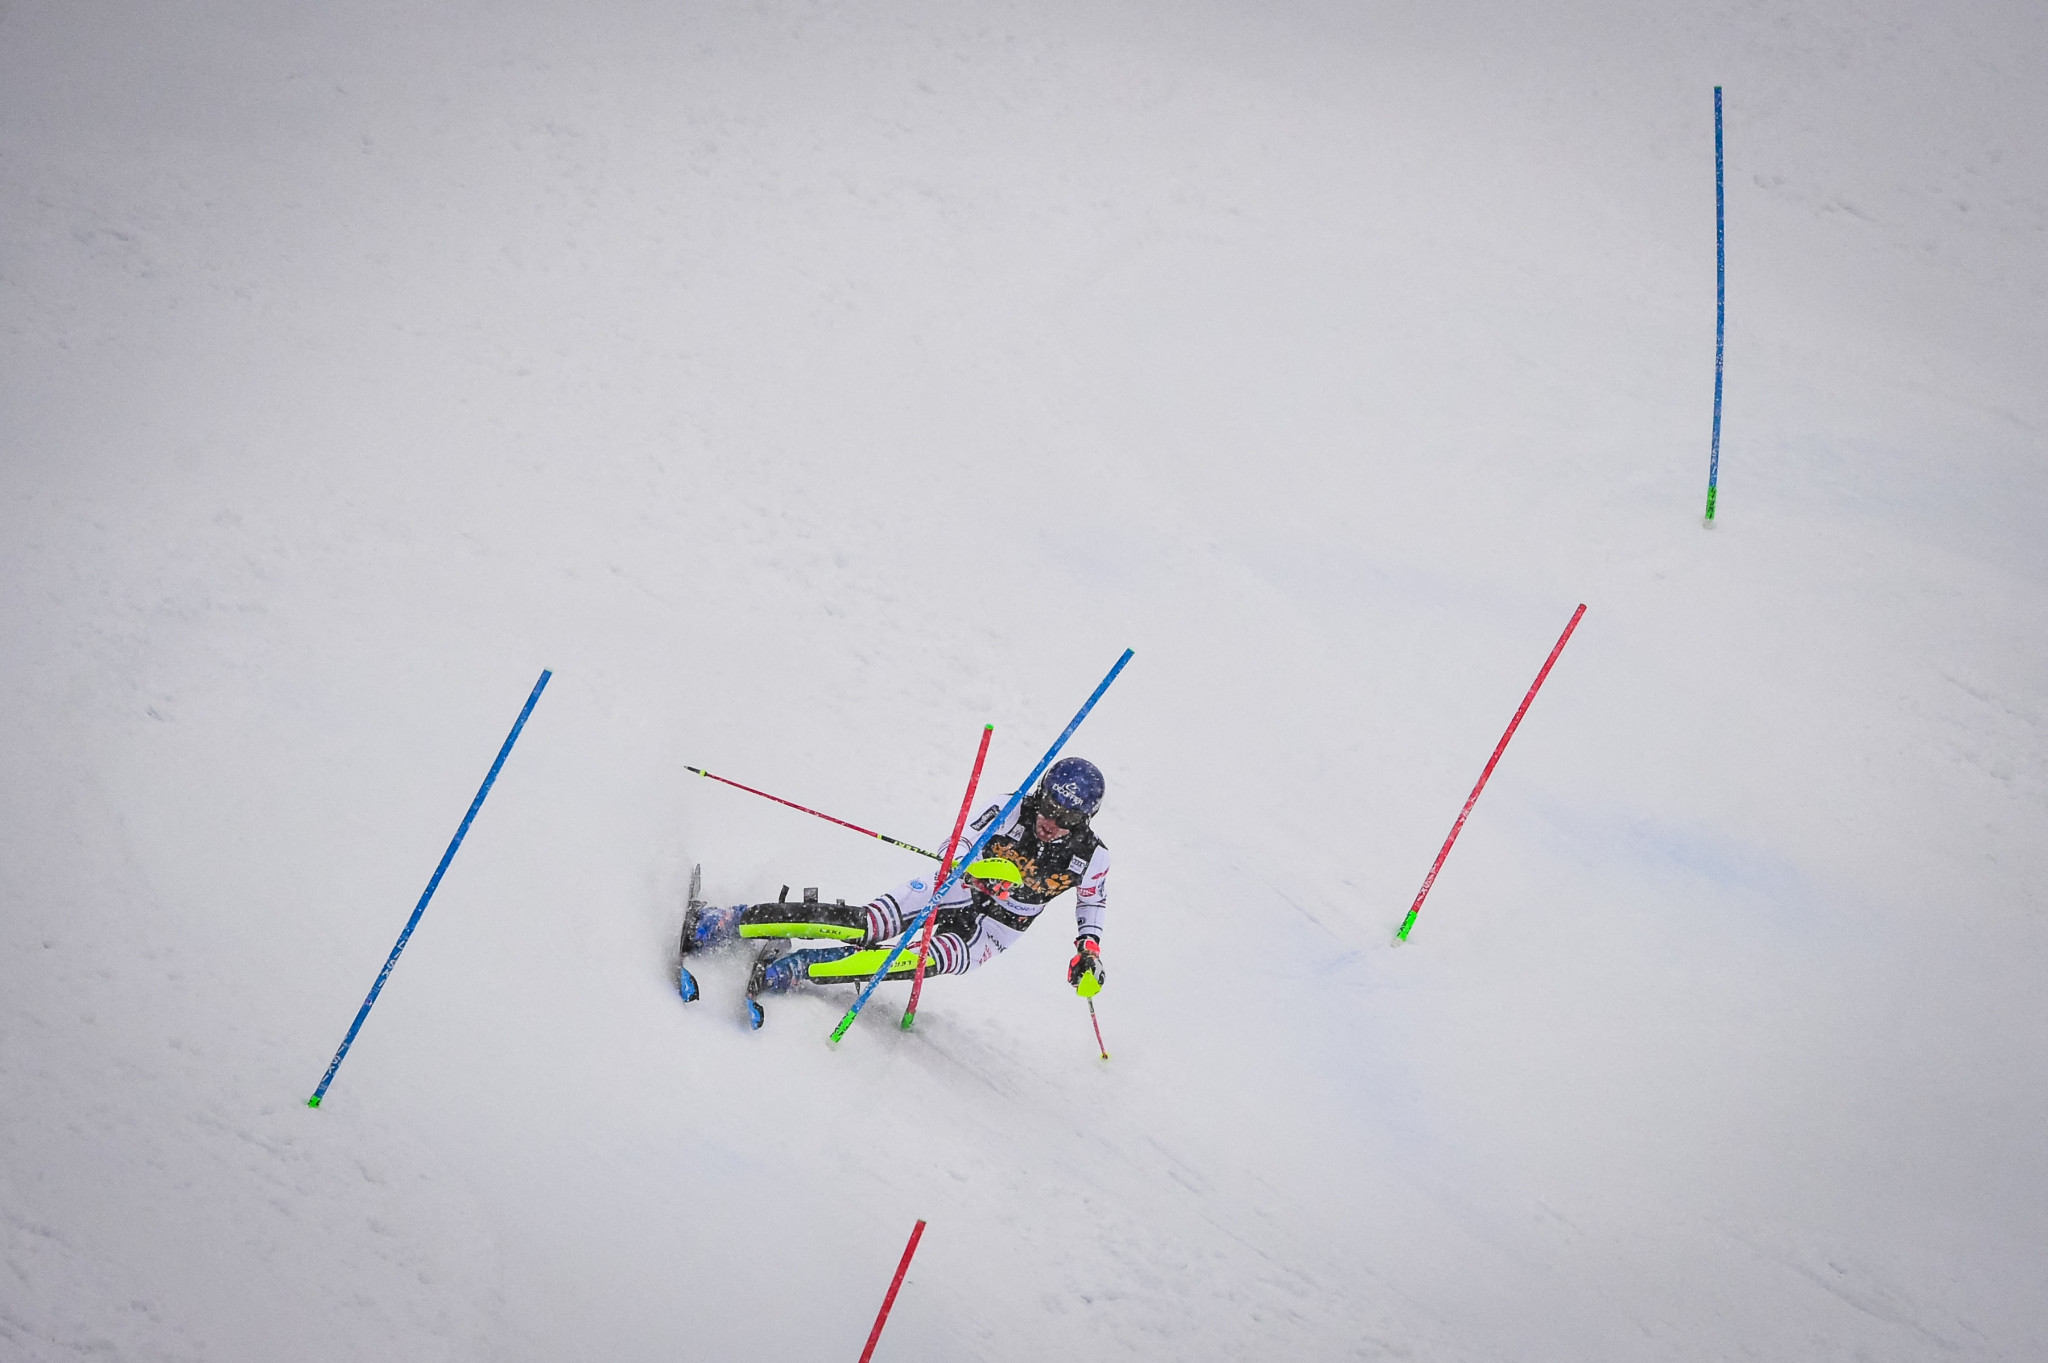 Noël triumphs in men's slalom at FIS Alpine Ski World Cup in Kranjska Gora